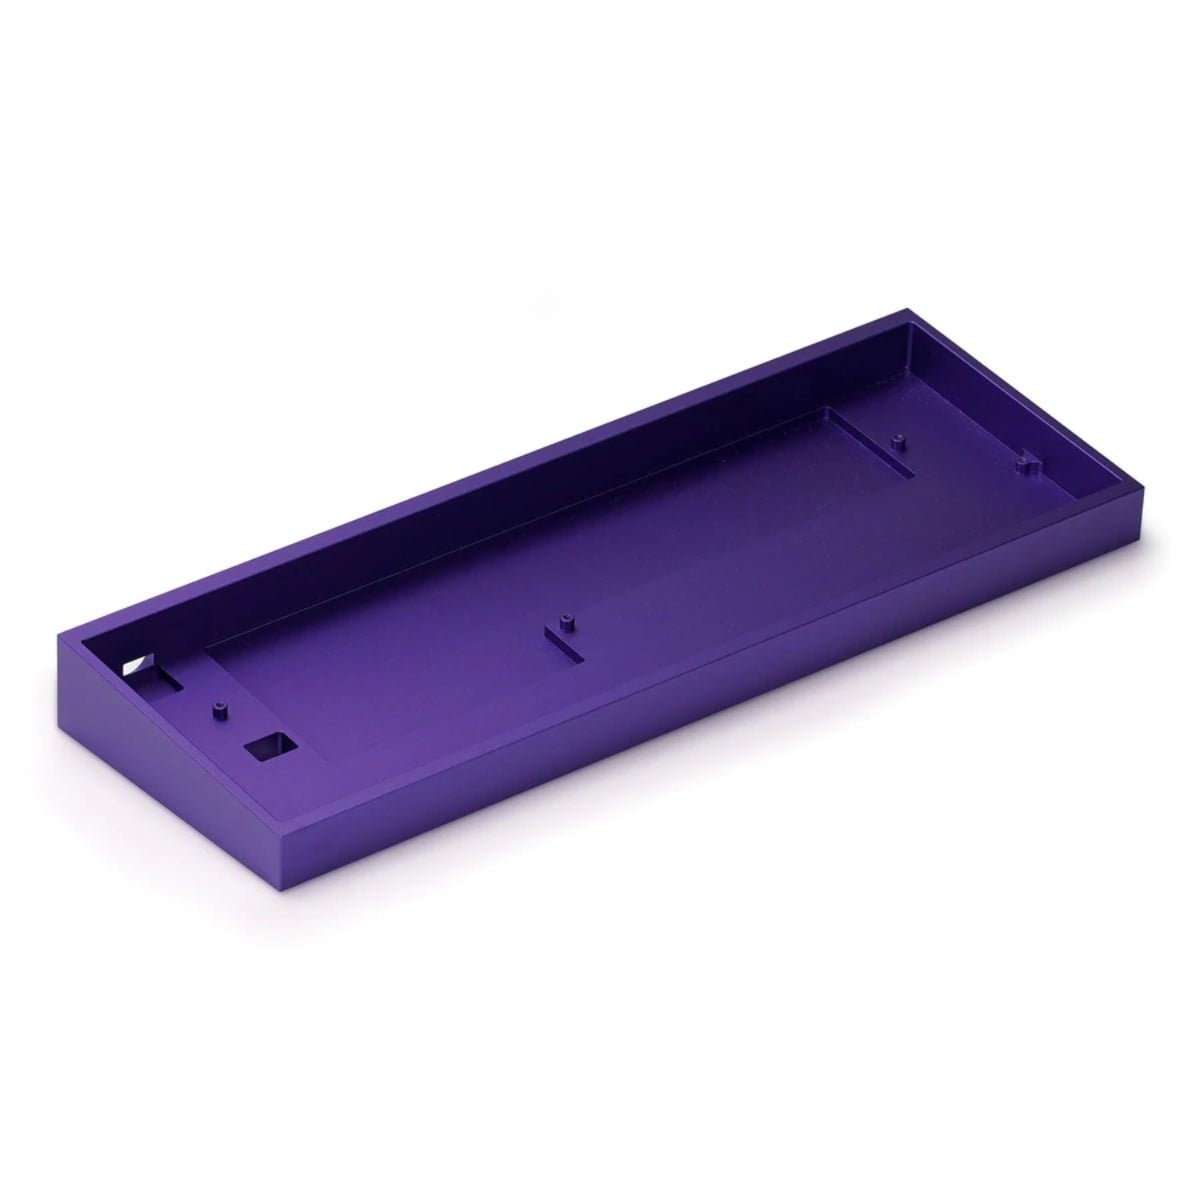 KBD Fans TOFU60 Aluminum 60% Keyboard Case - Dark Purple - Store 974 | ستور ٩٧٤